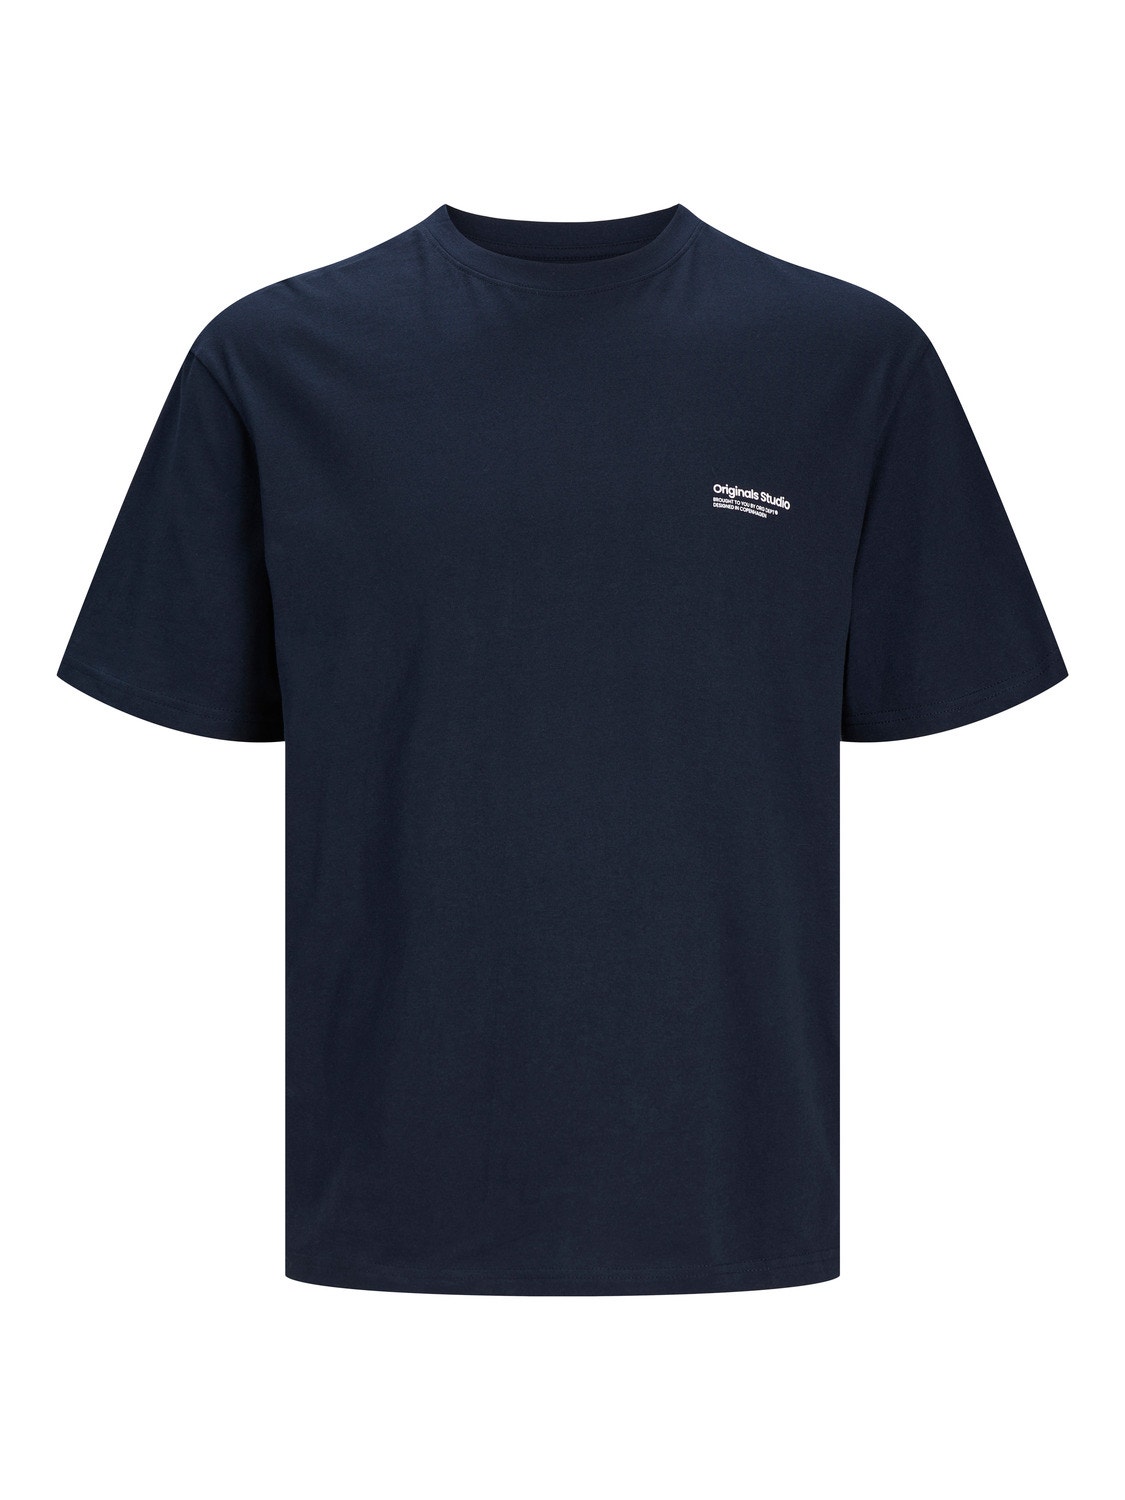 Jack & Jones Printed Crew neck T-shirt -Sky Captain - 12240122